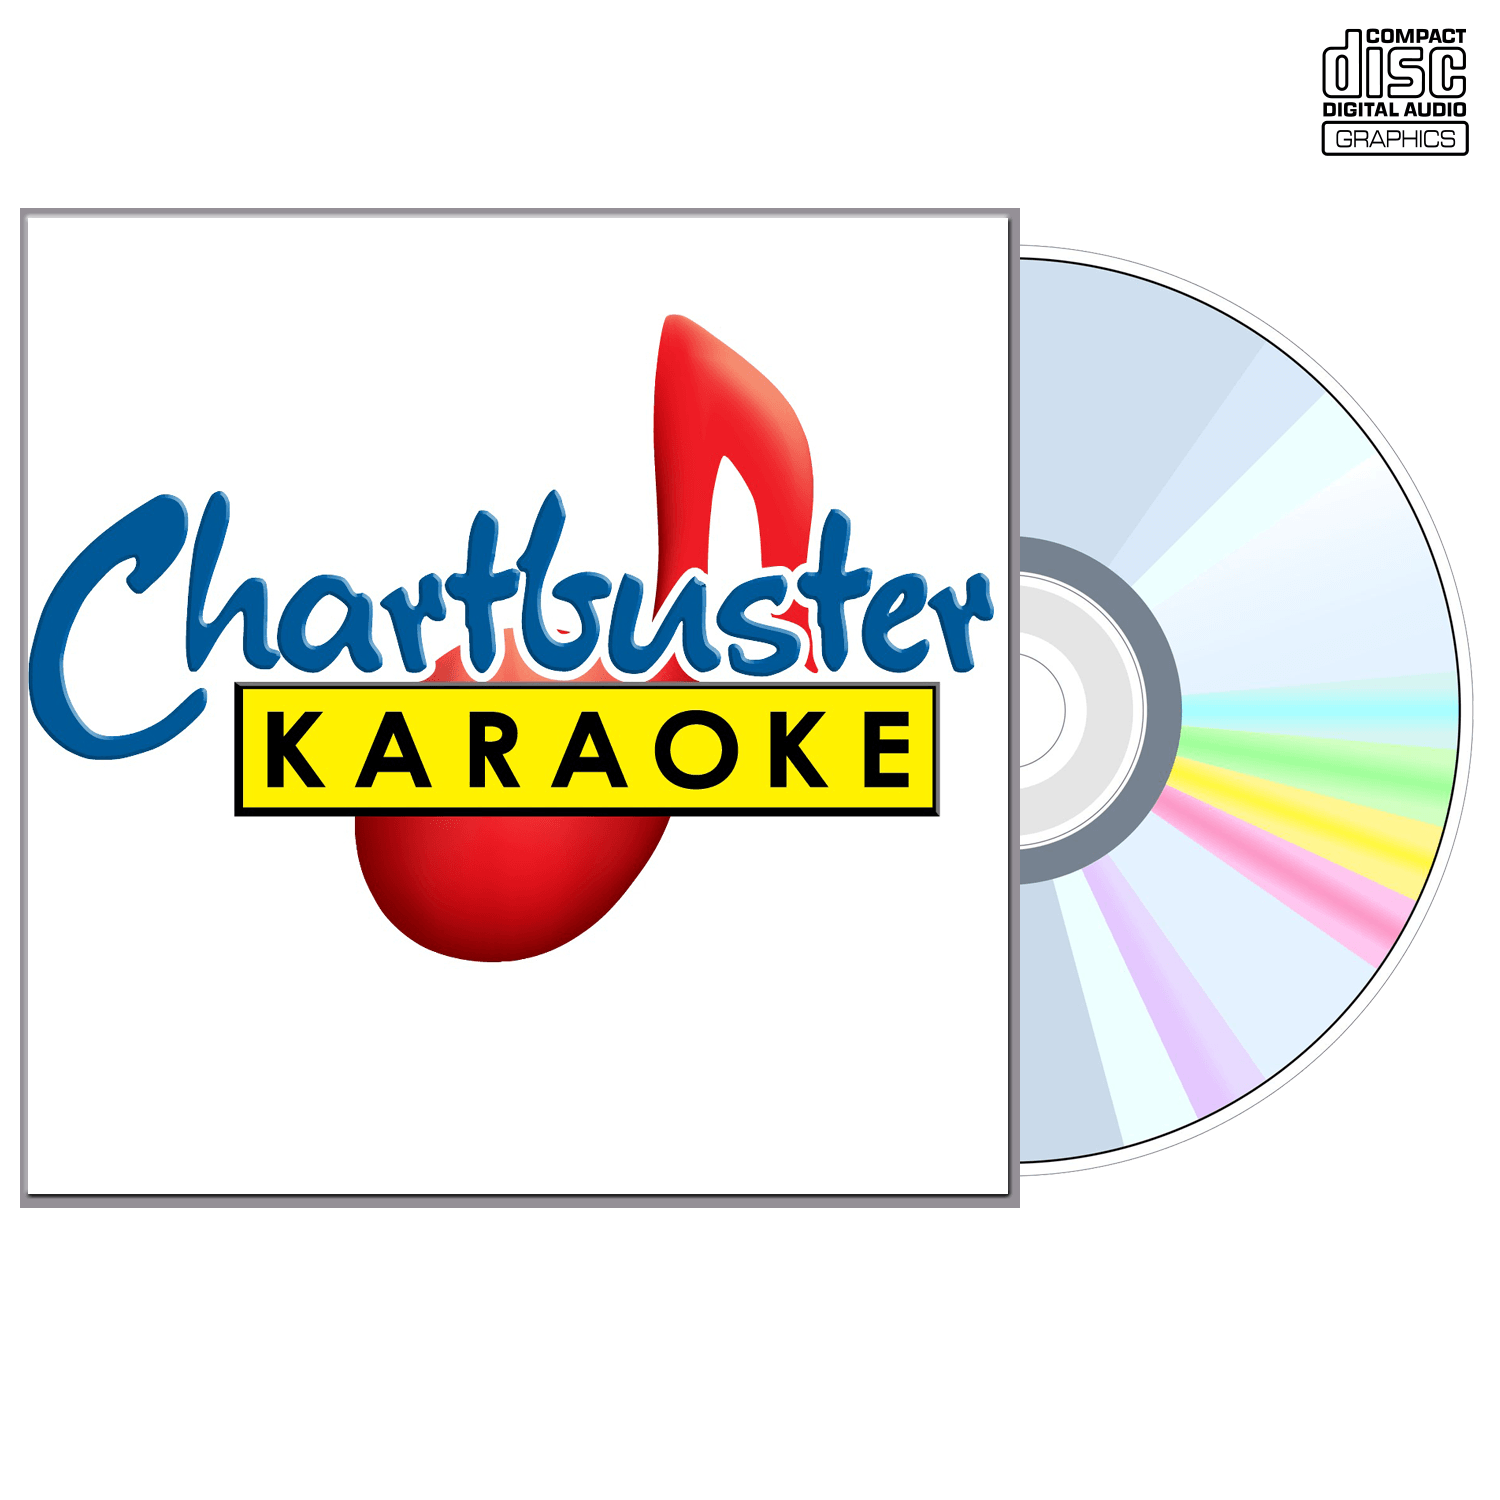 Barry Manilow Vol 1 - CD+G - Chartbuster Karaoke - Karaoke Home Entertainment